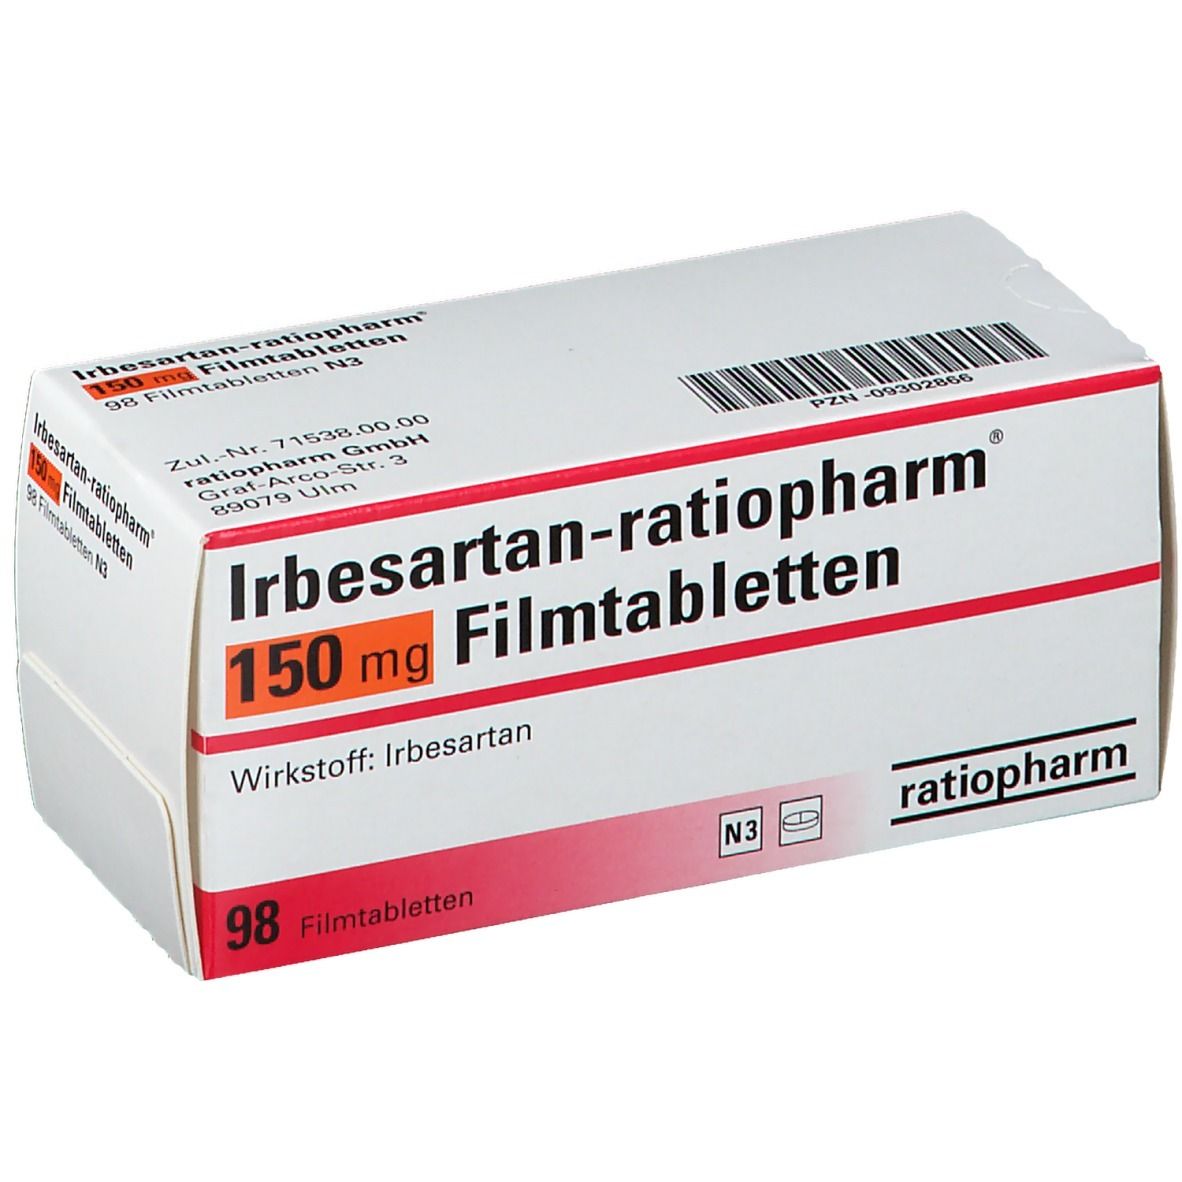 Irbesartan-ratiopharm 150 mg